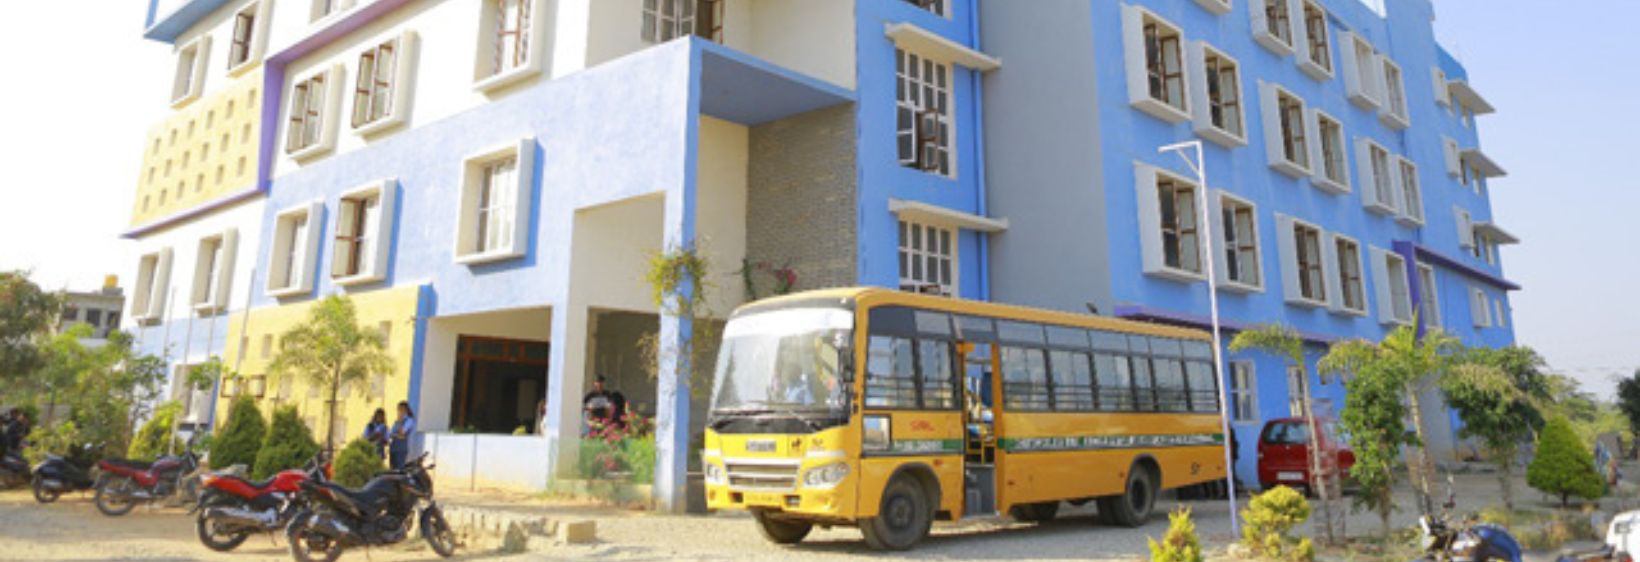 Christian College of Nursing - Bangalore